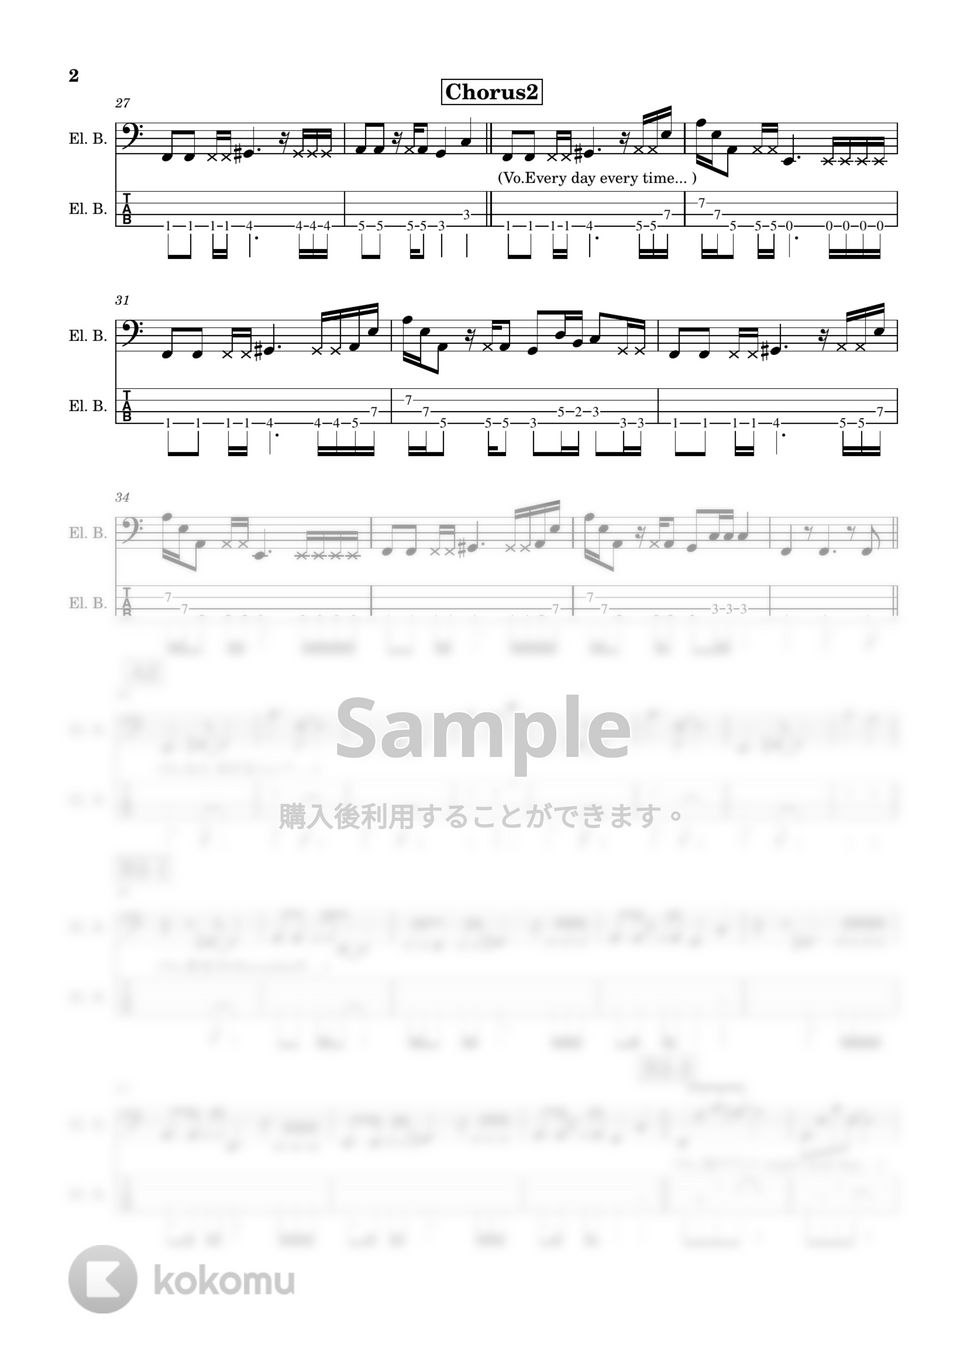 iri - Wonderland (ベース / TAB / 楽譜) by TARUO's_Bass_Score